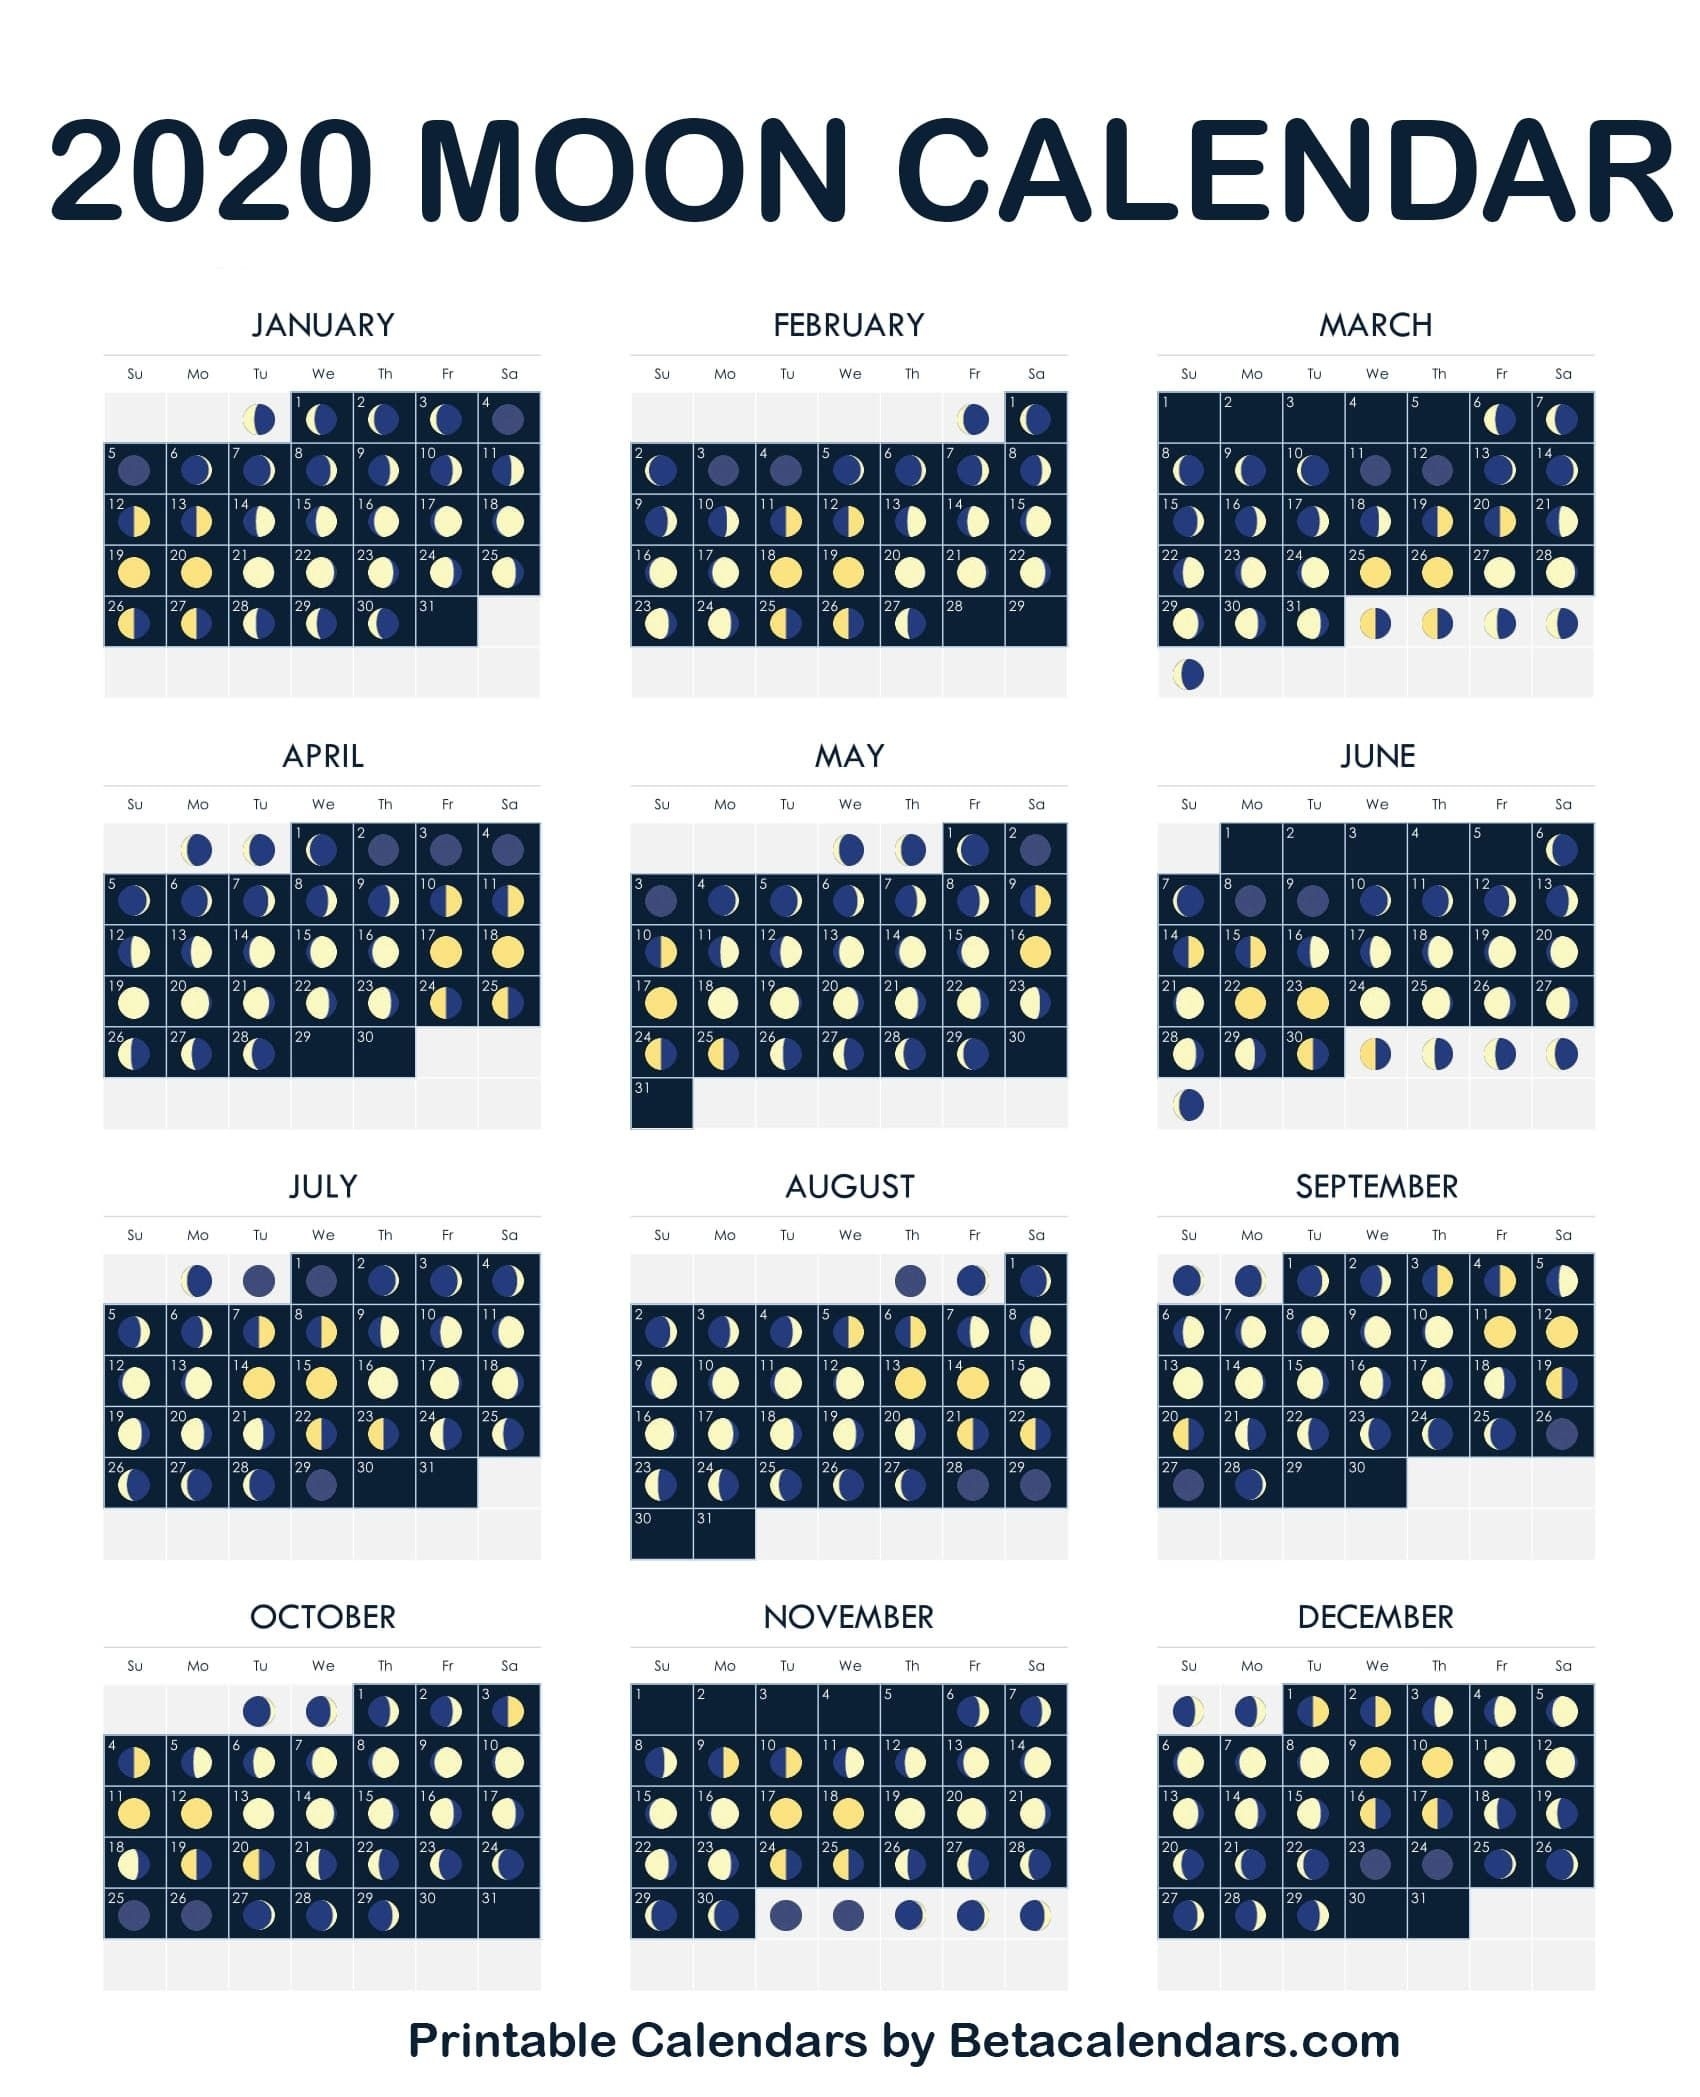 2020 Moon Calendar | Moon Calendar, Calendar, Moon Phase March 2020 Lunar Calendar